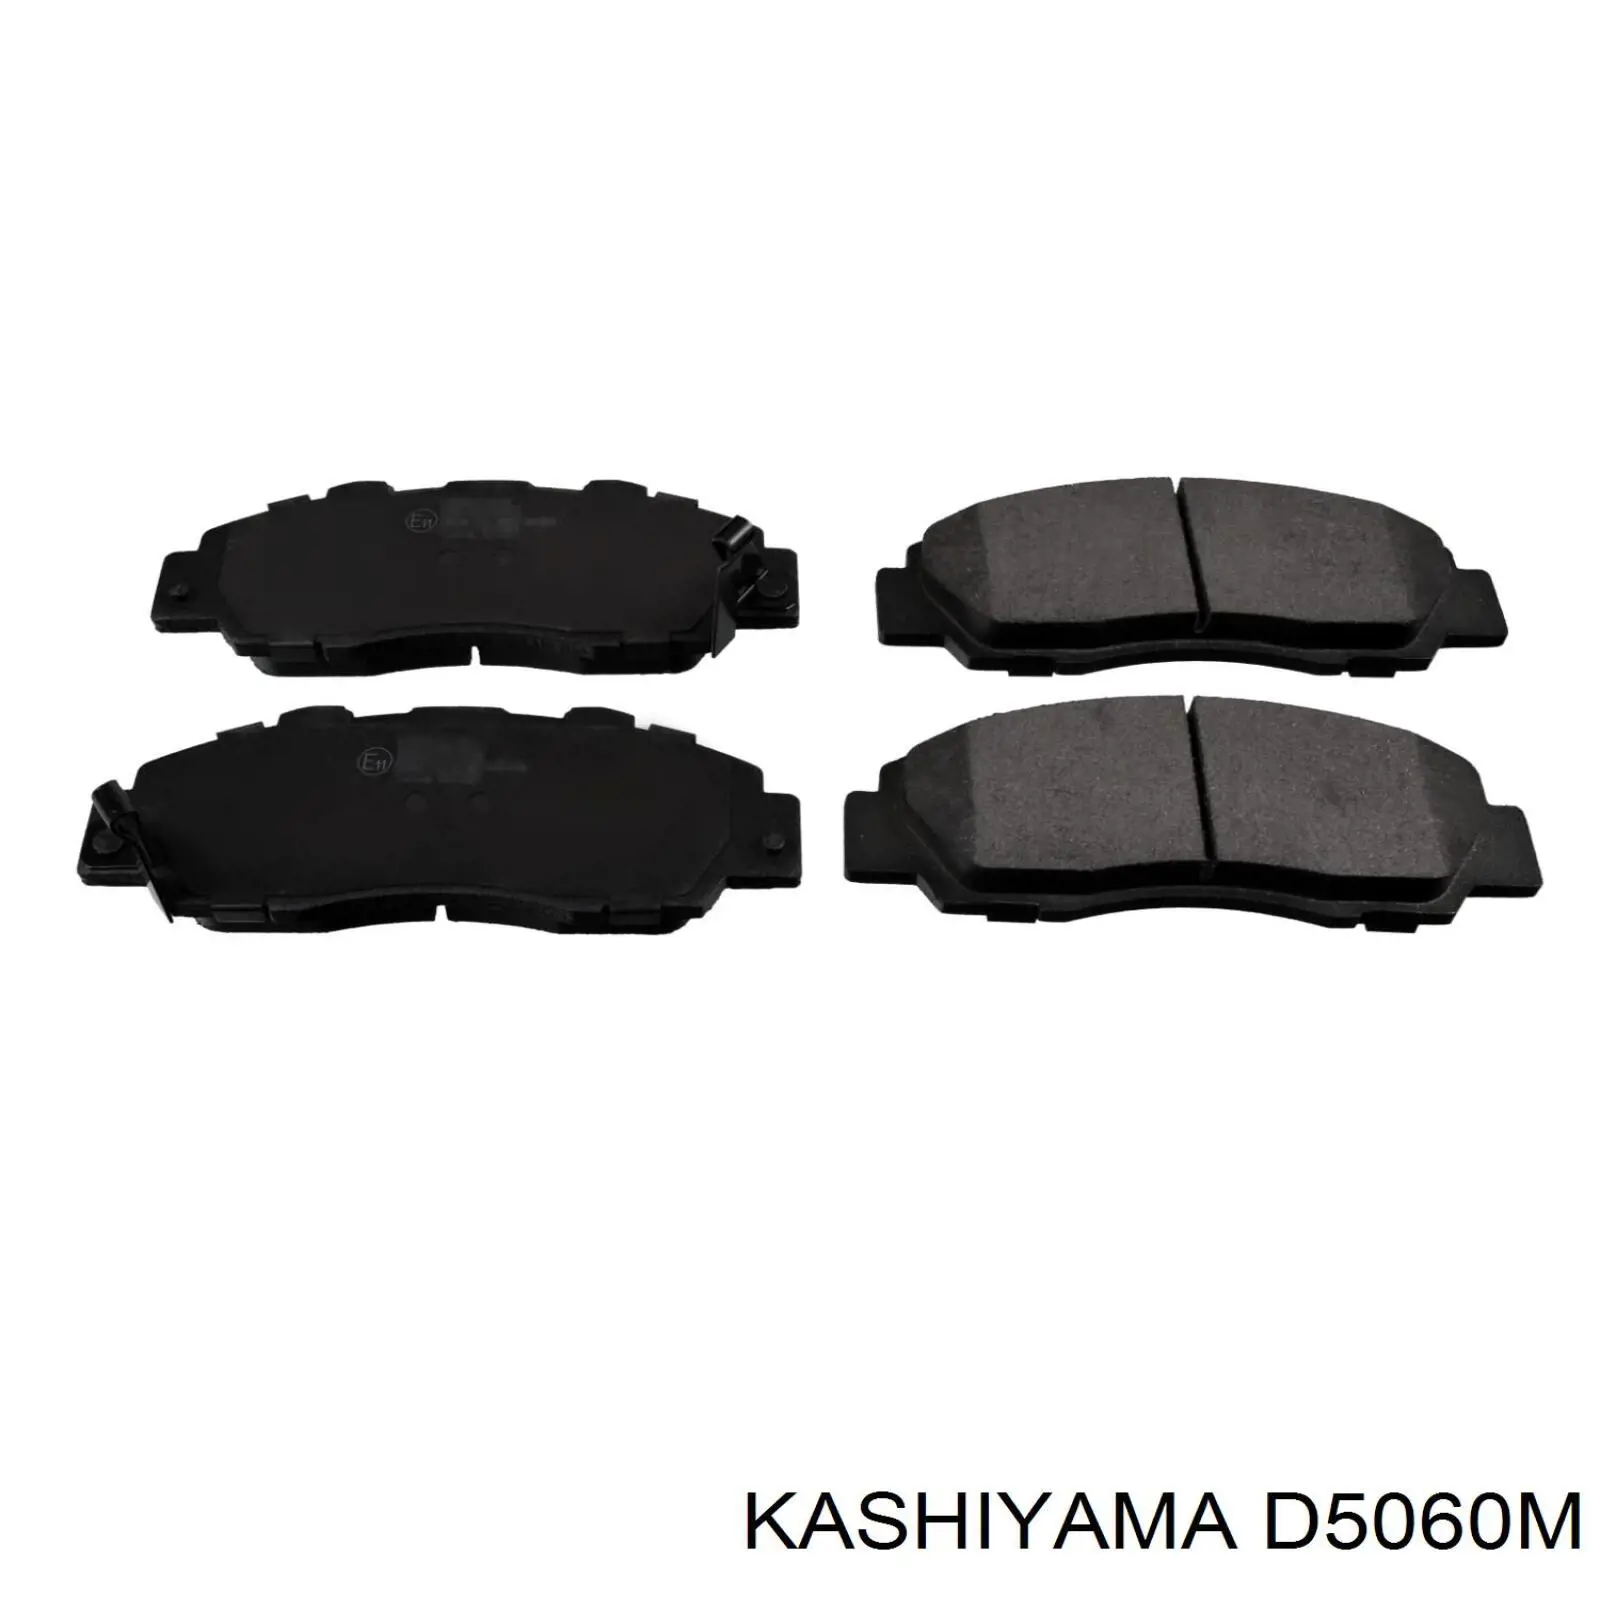 D5060M Kashiyama pastillas de freno delanteras